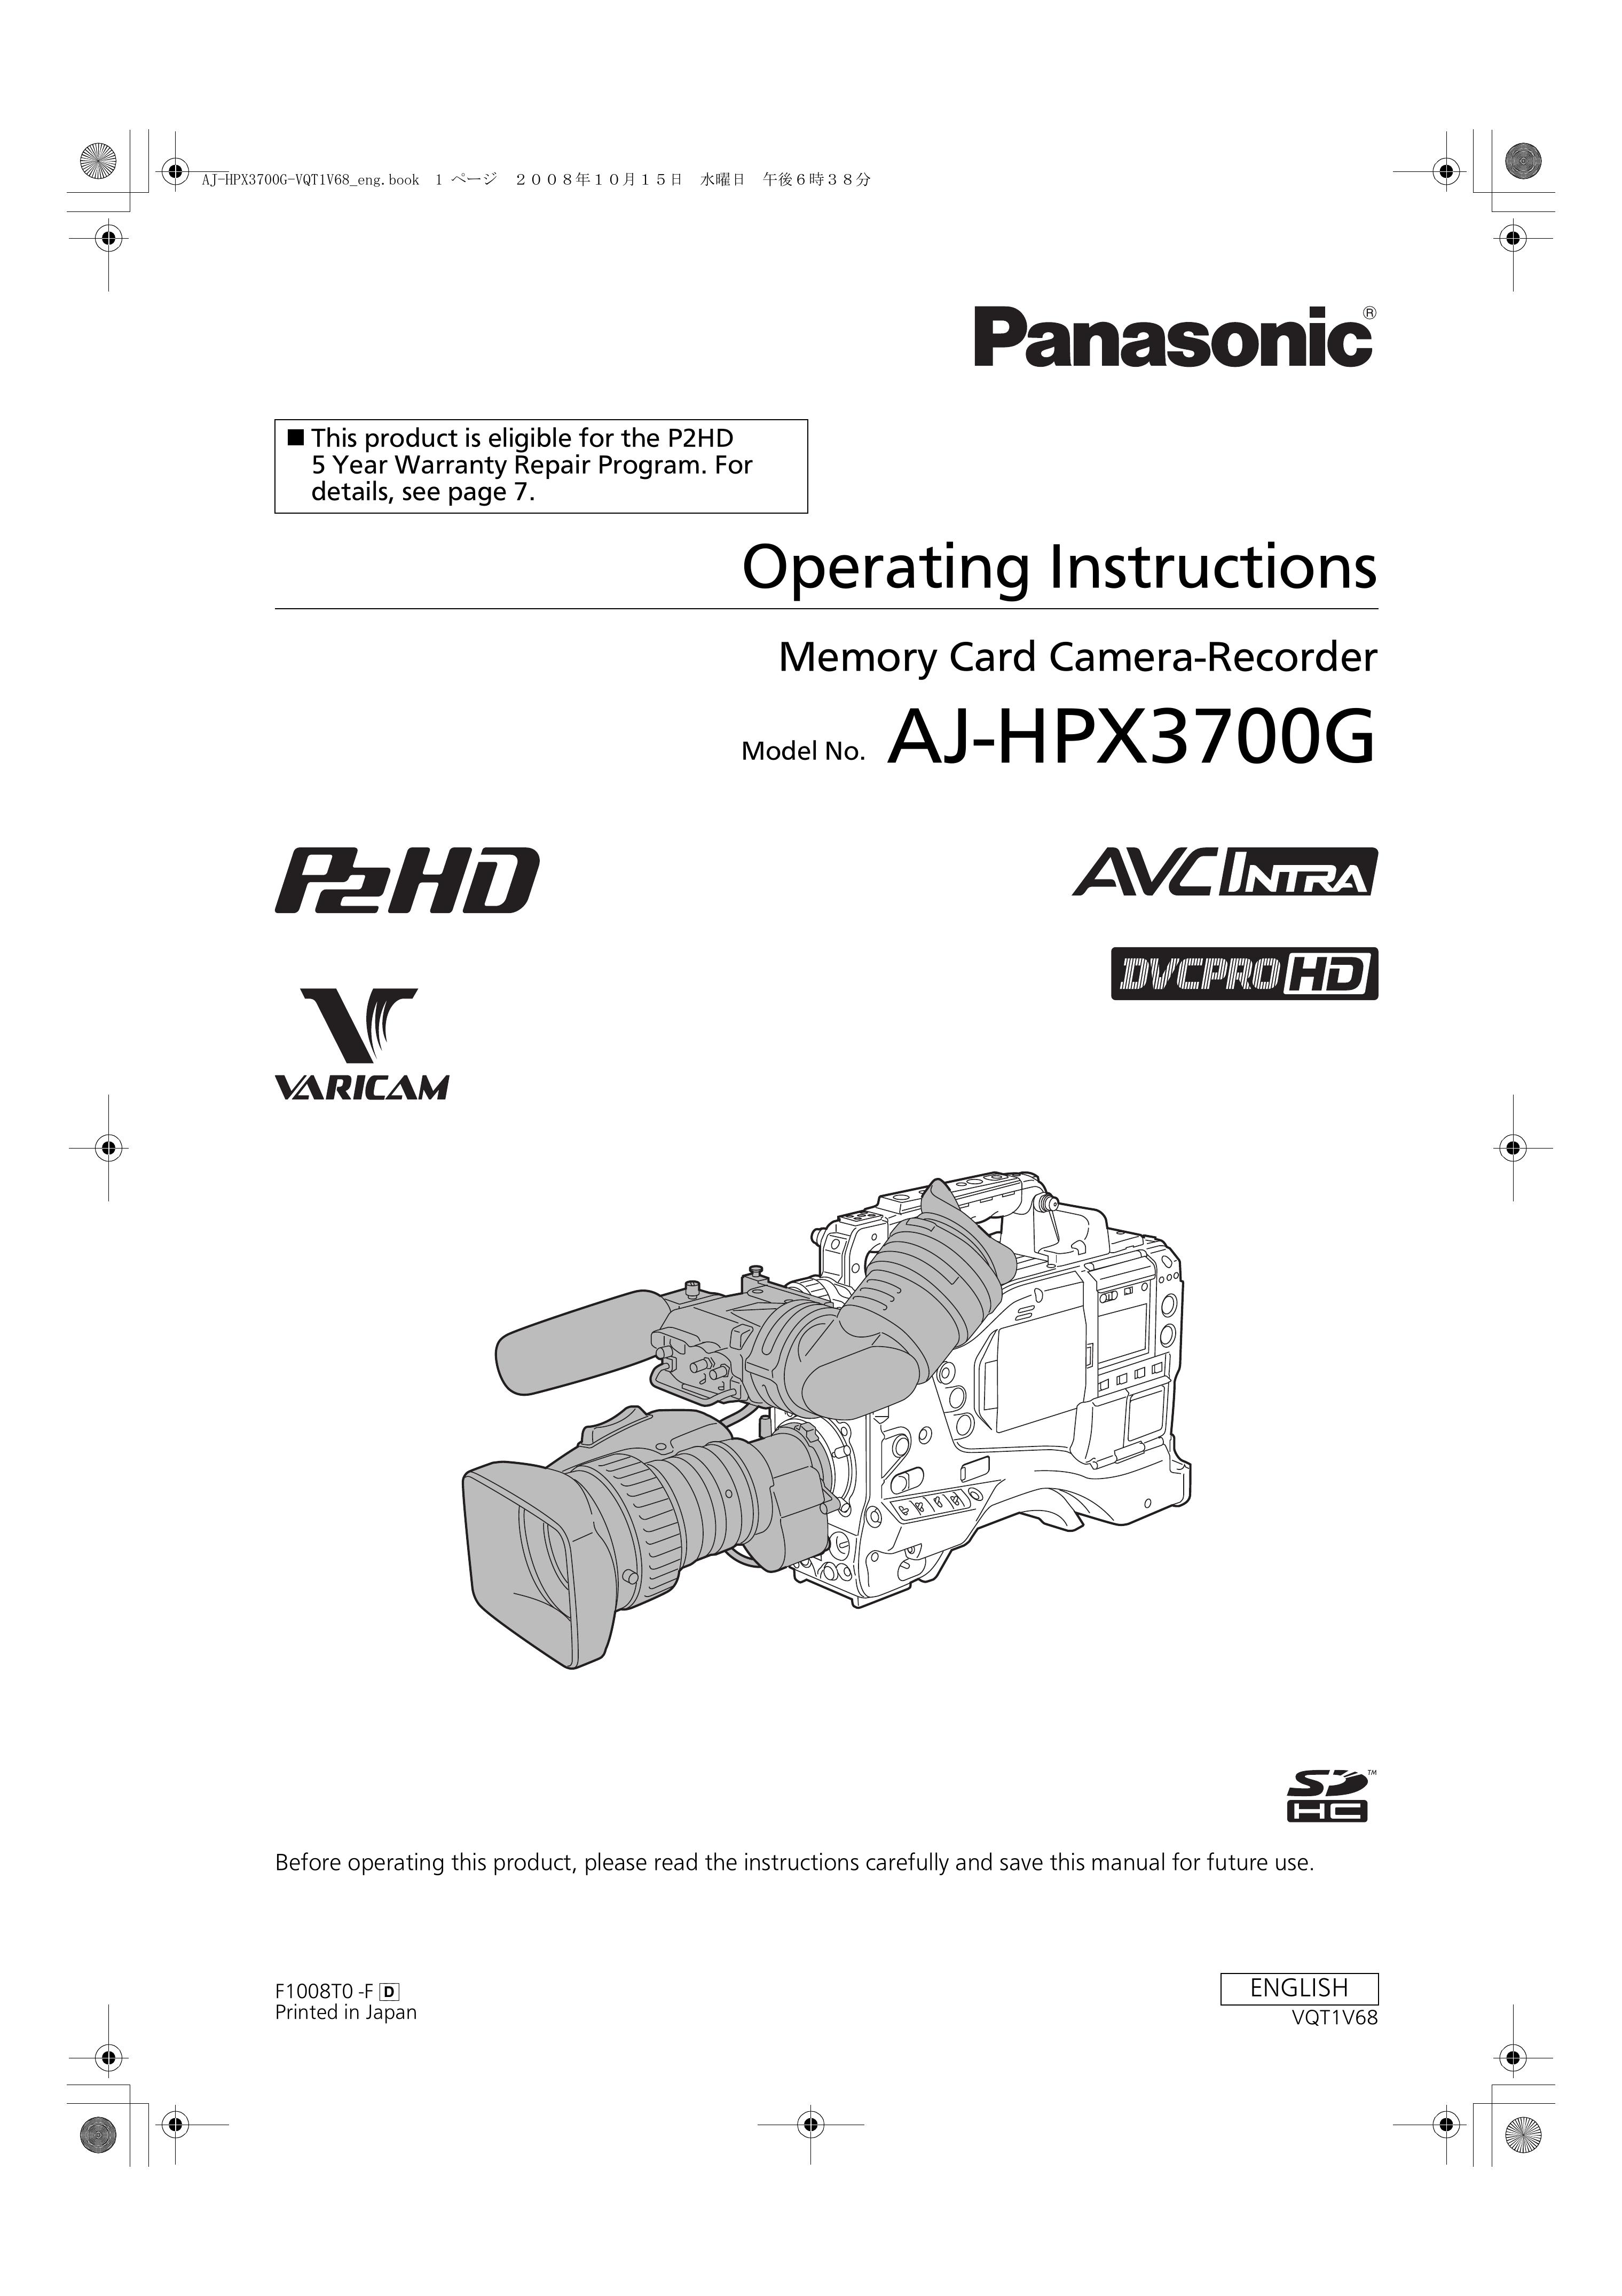 Panasonic AJ-HPX3700G Camera Accessories User Manual